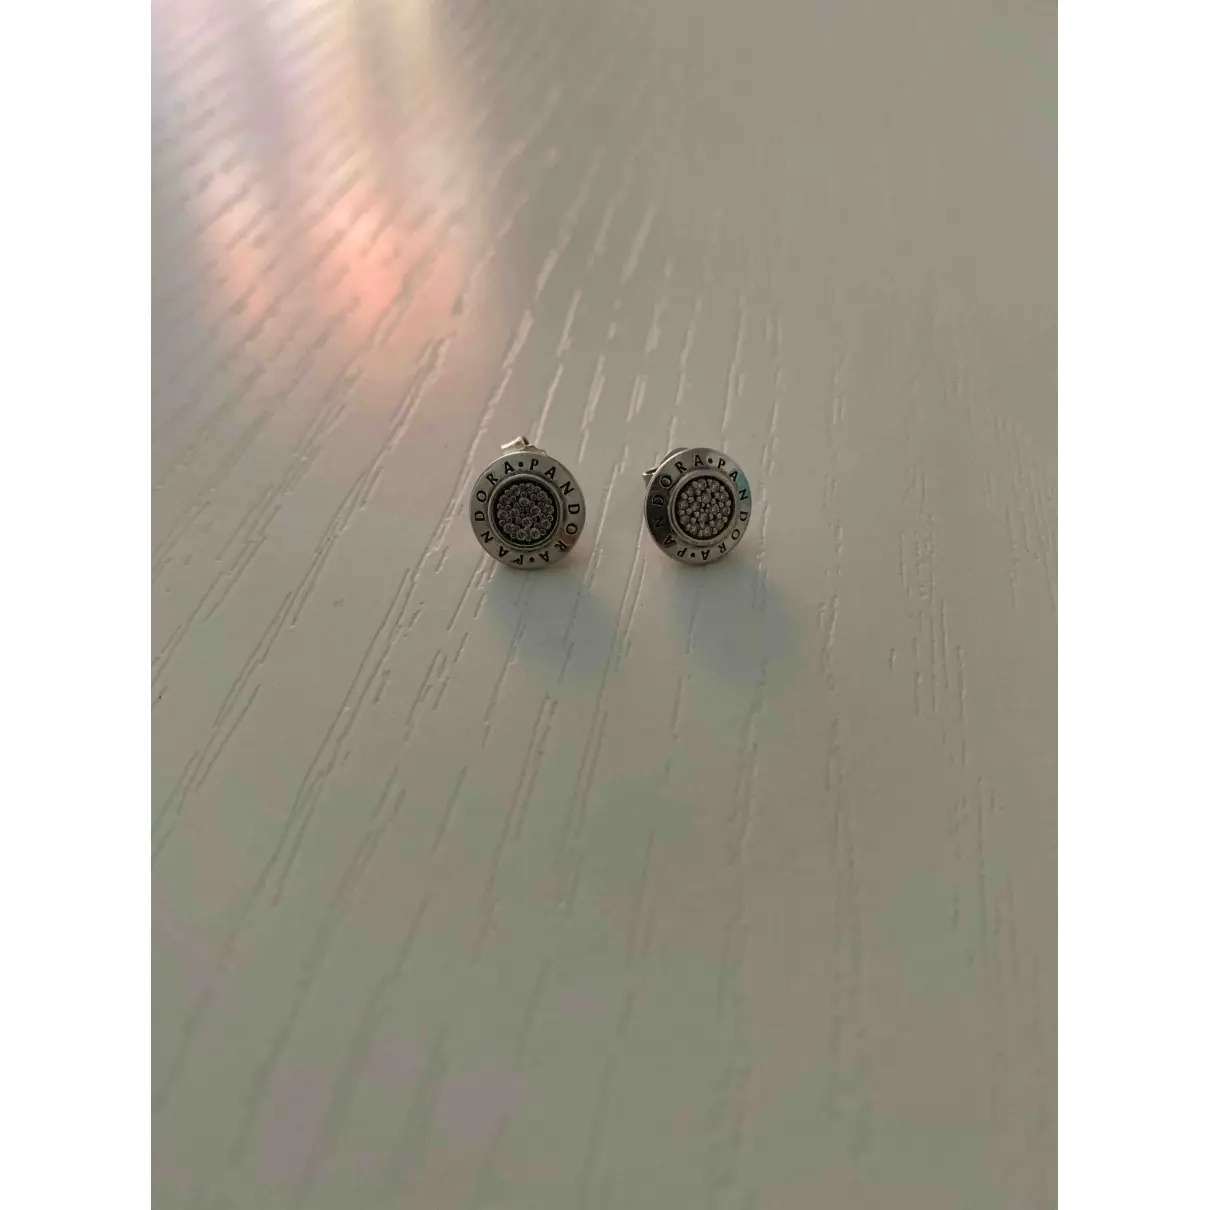 Buy Pandora Silver earrings online